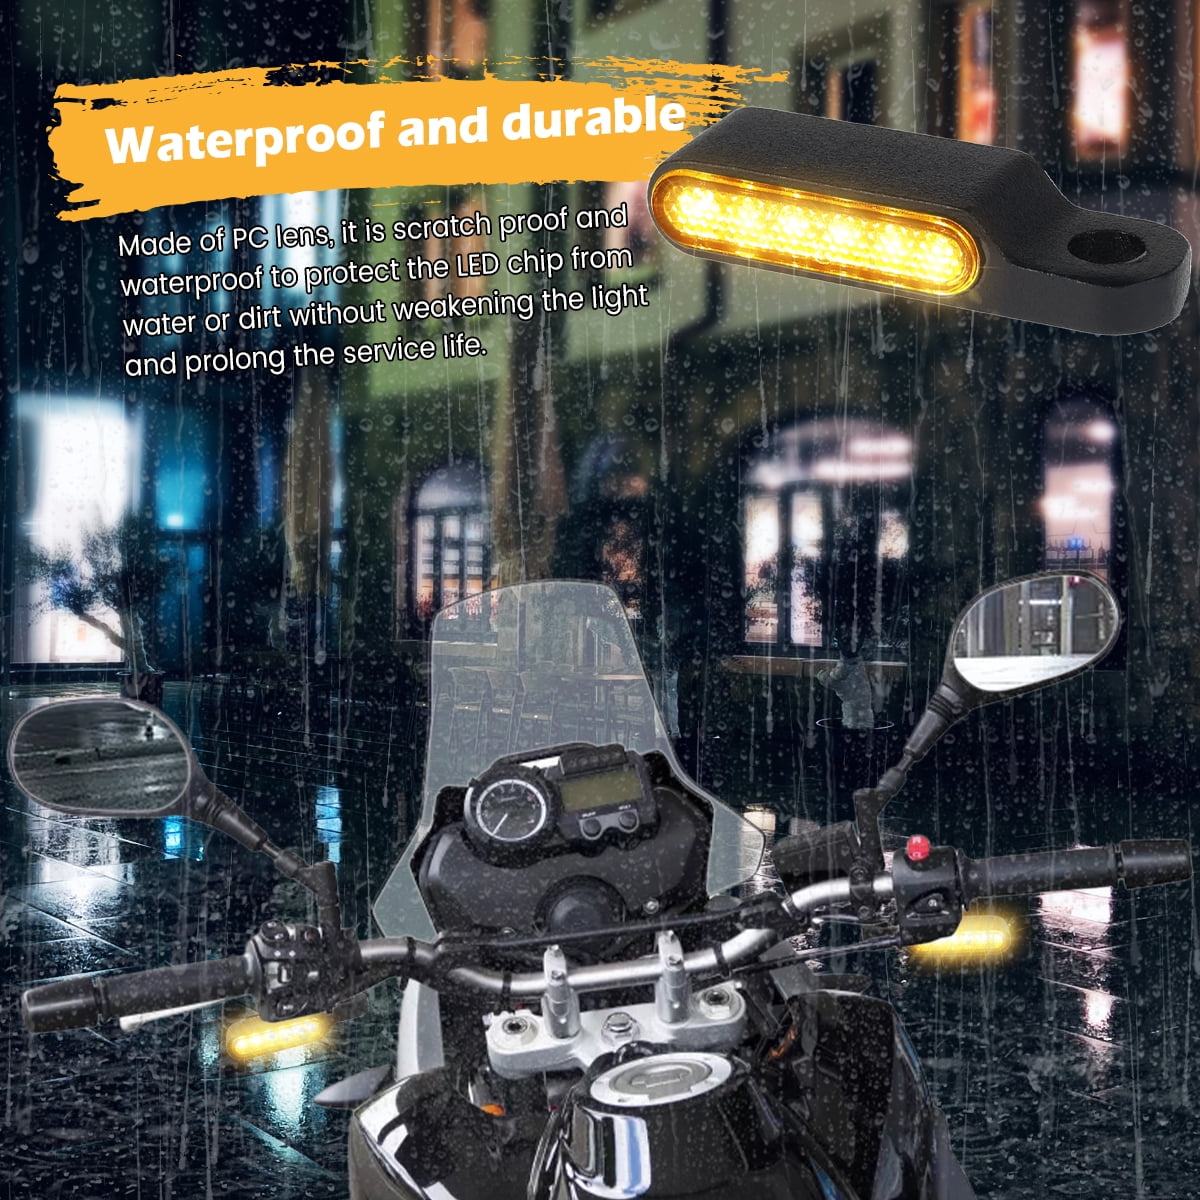 Buy Kellermann LED metal running light indicators M8 Jetstream® black  Neutral - POLO Motorrad